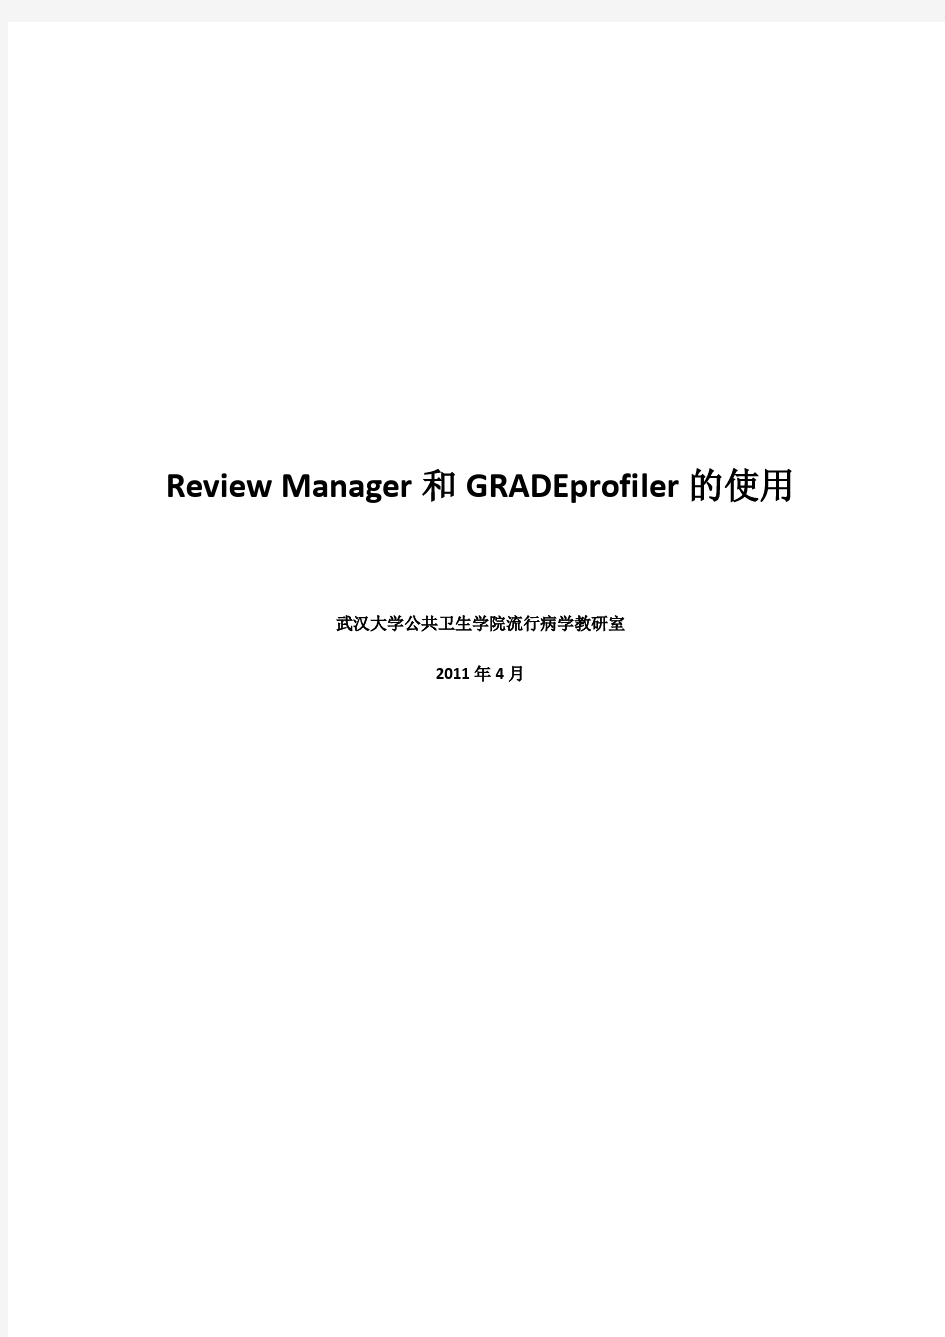 Review Manager 和 GRADEprofiler的使用